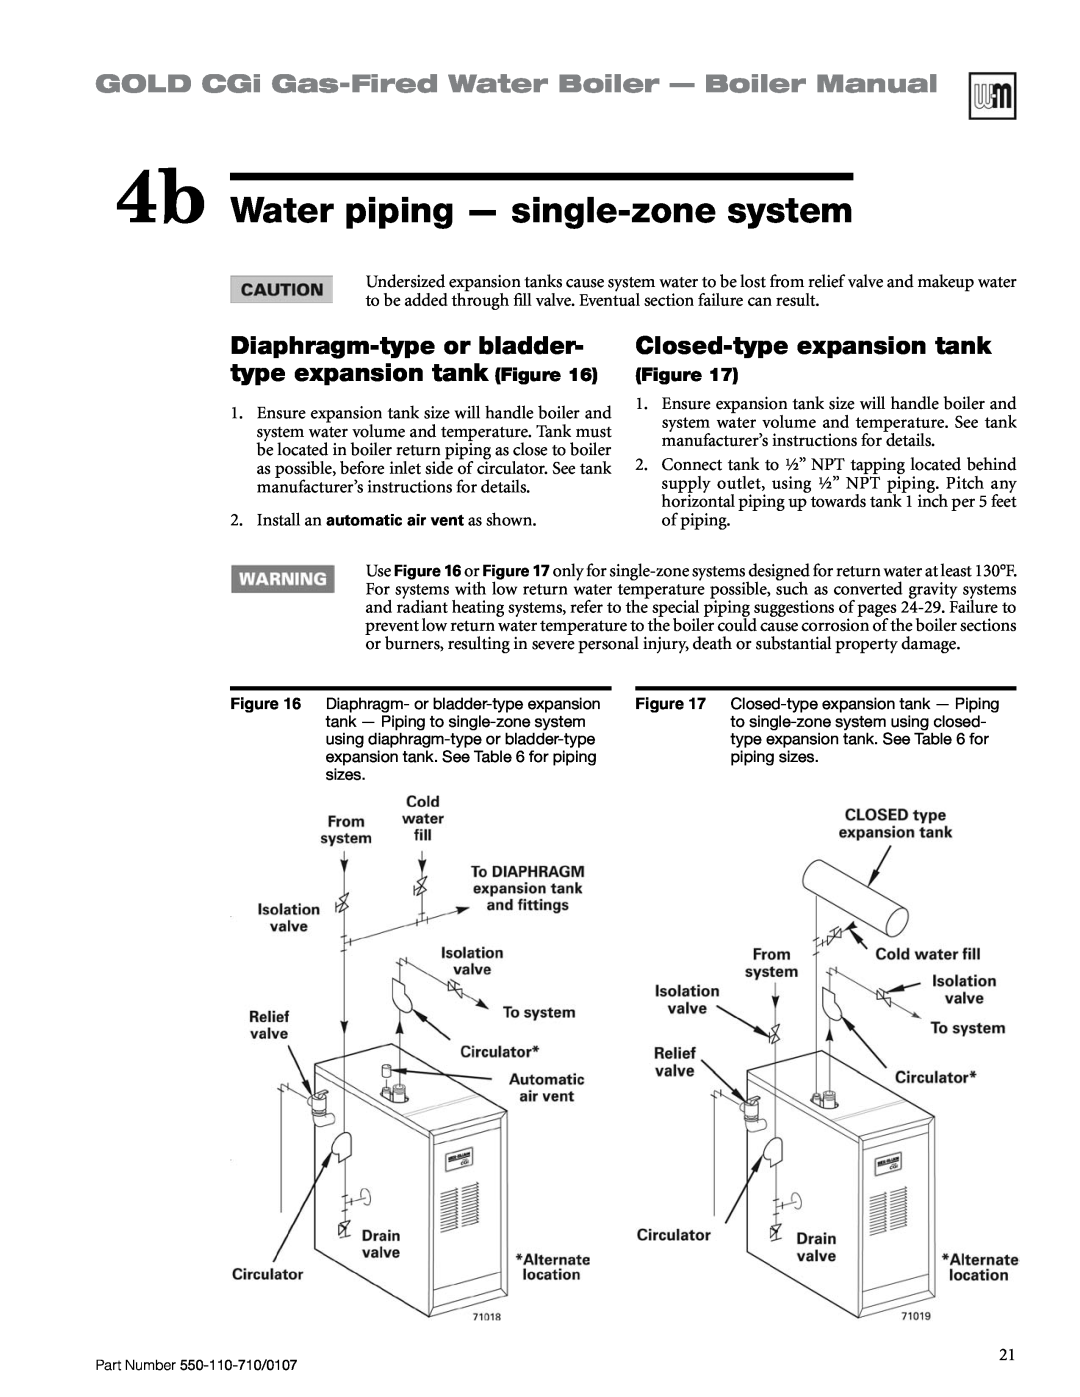 Weil-McLain Series 2 manual 4b Water piping — single-zonesystem, GOLD CGi Gas-FiredWater Boiler — Boiler Manual, Figure 